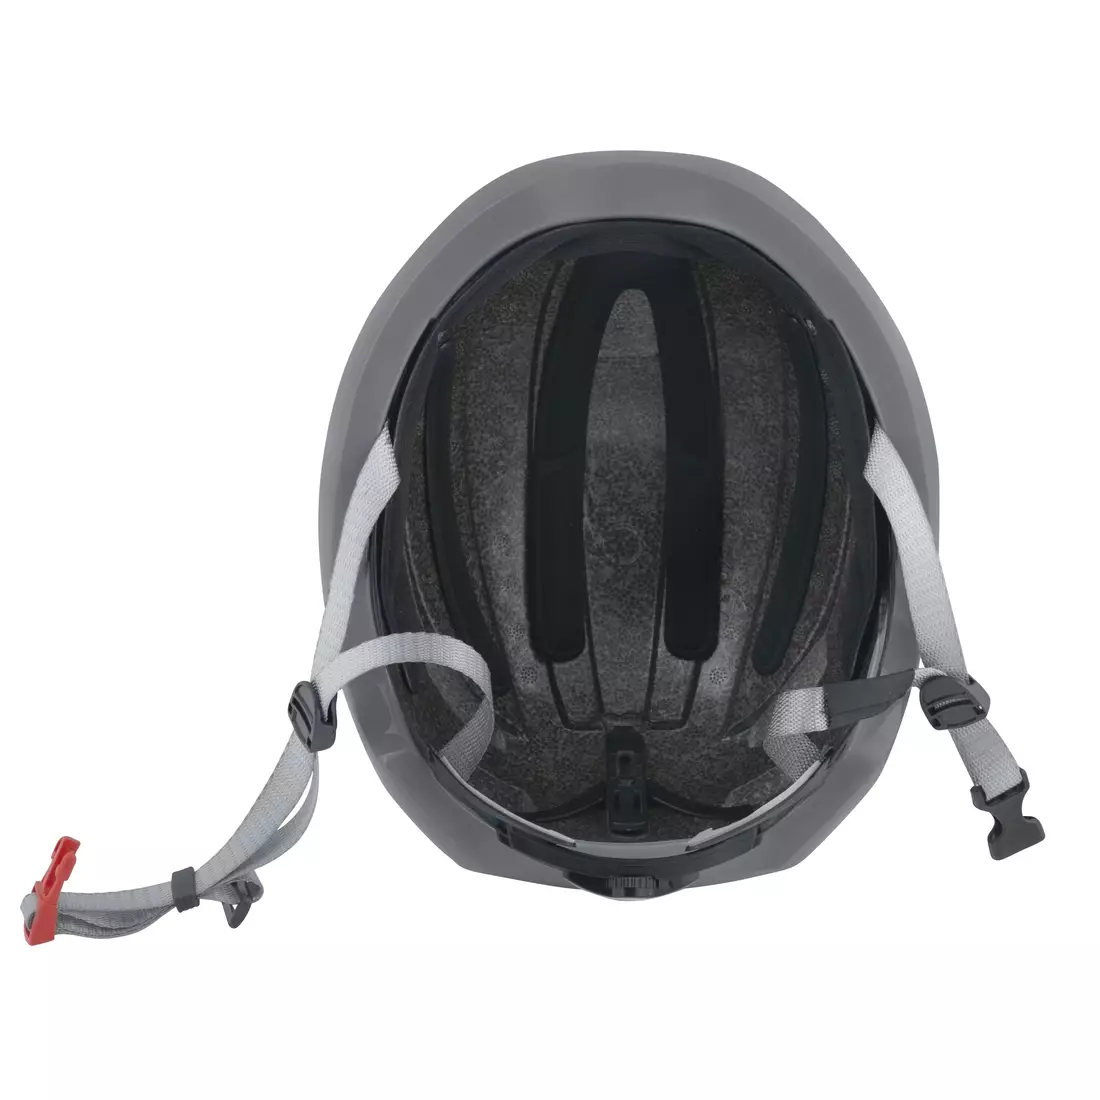 FORCE road bike helmet ORCA fluo/grey